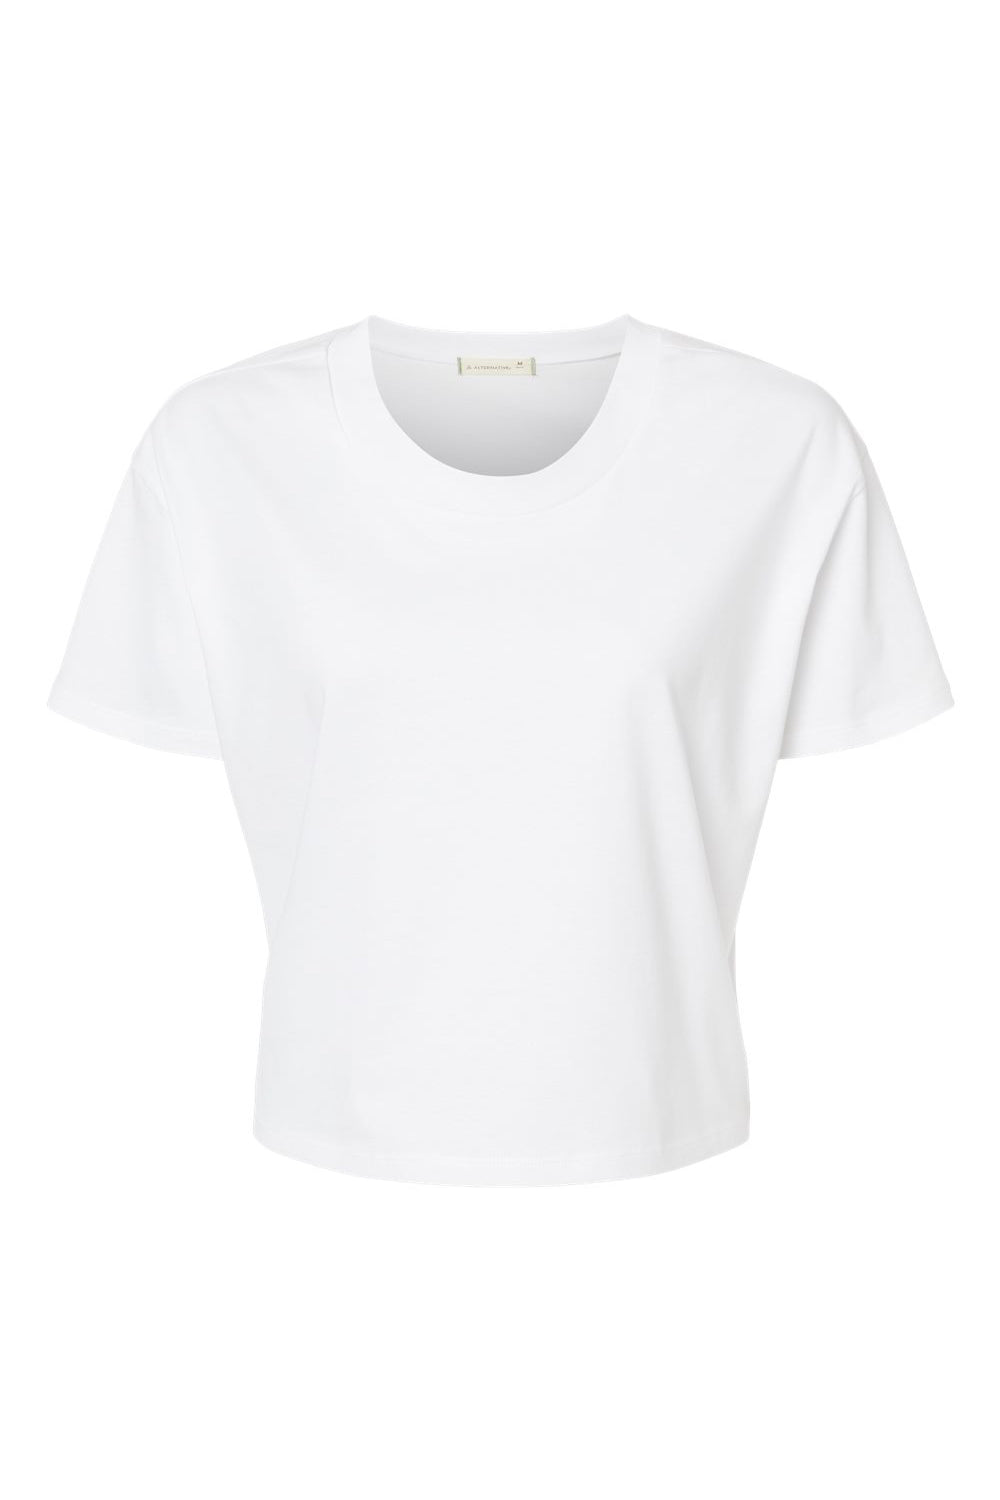 Alternative 5114C Womens Headliner Cropped Go To Short Sleeve Crewneck T-Shirt White Flat Front